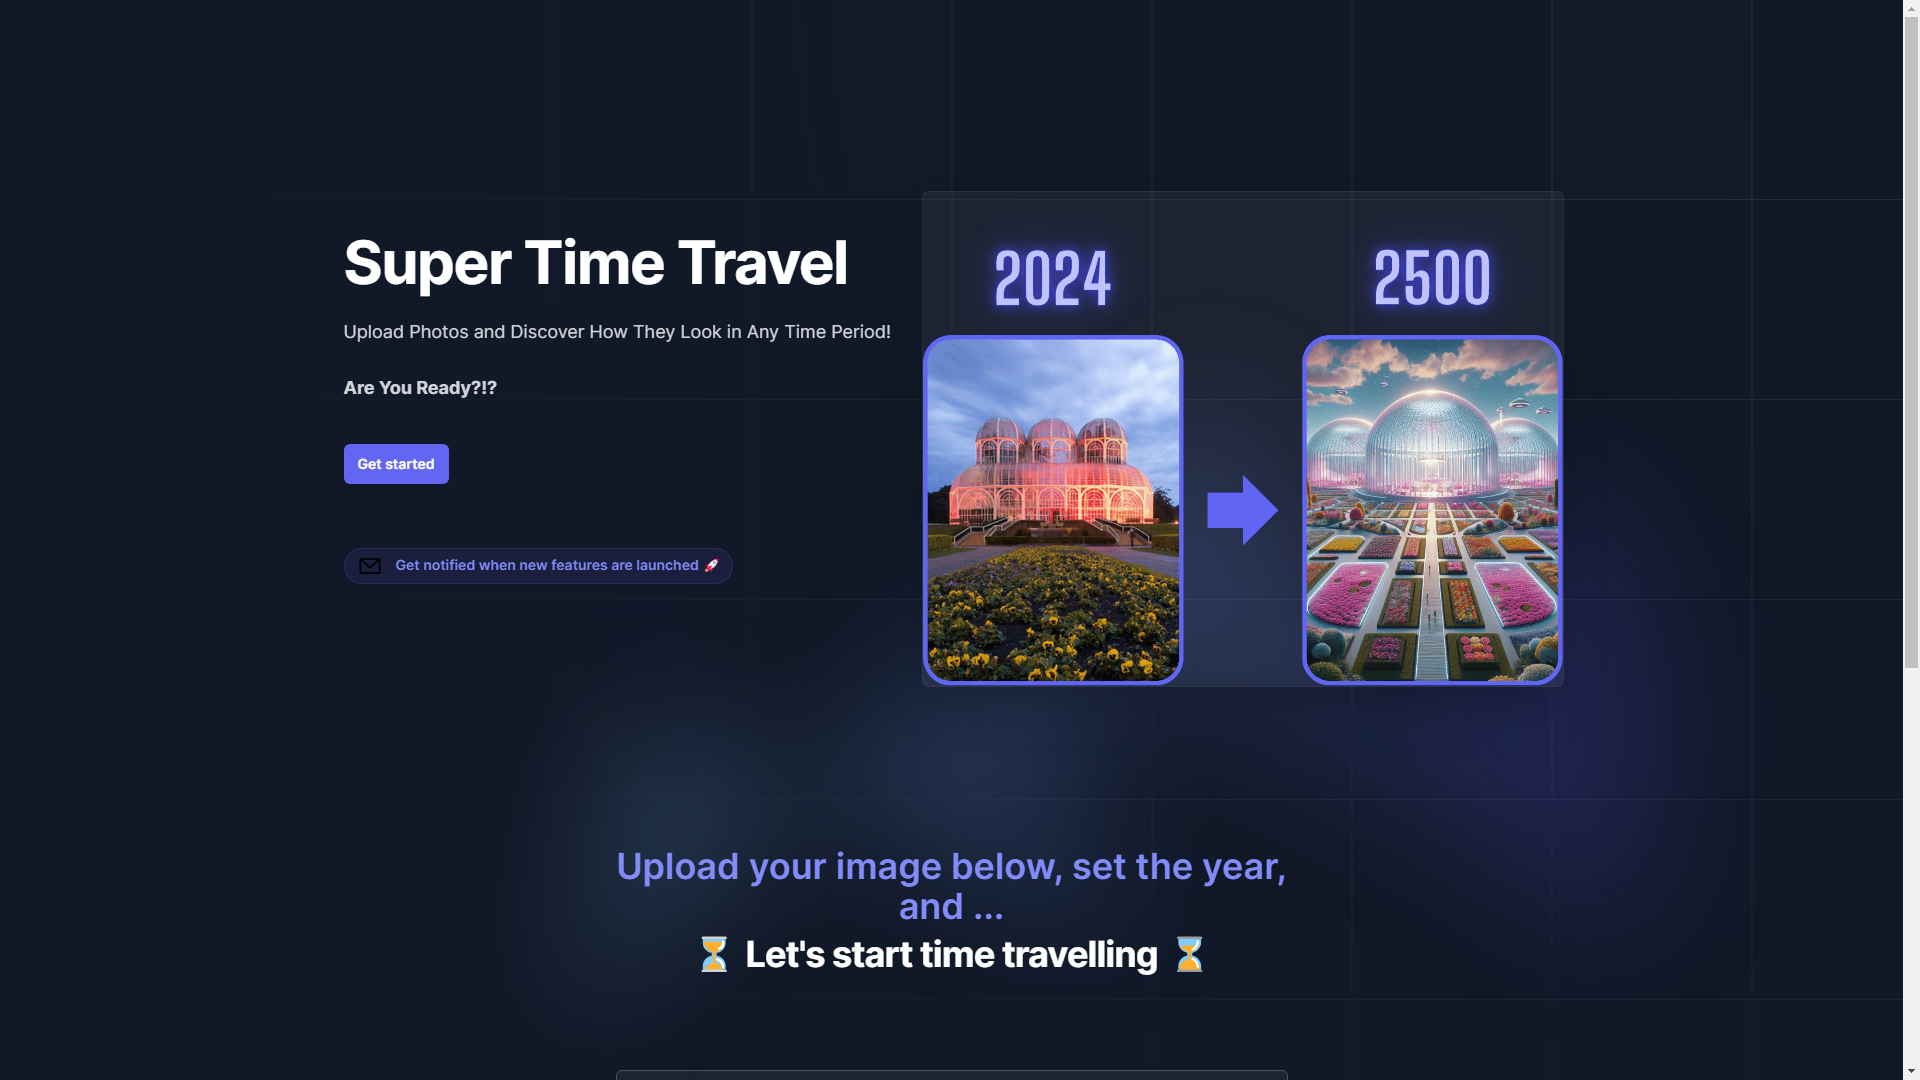 Super Time Travel